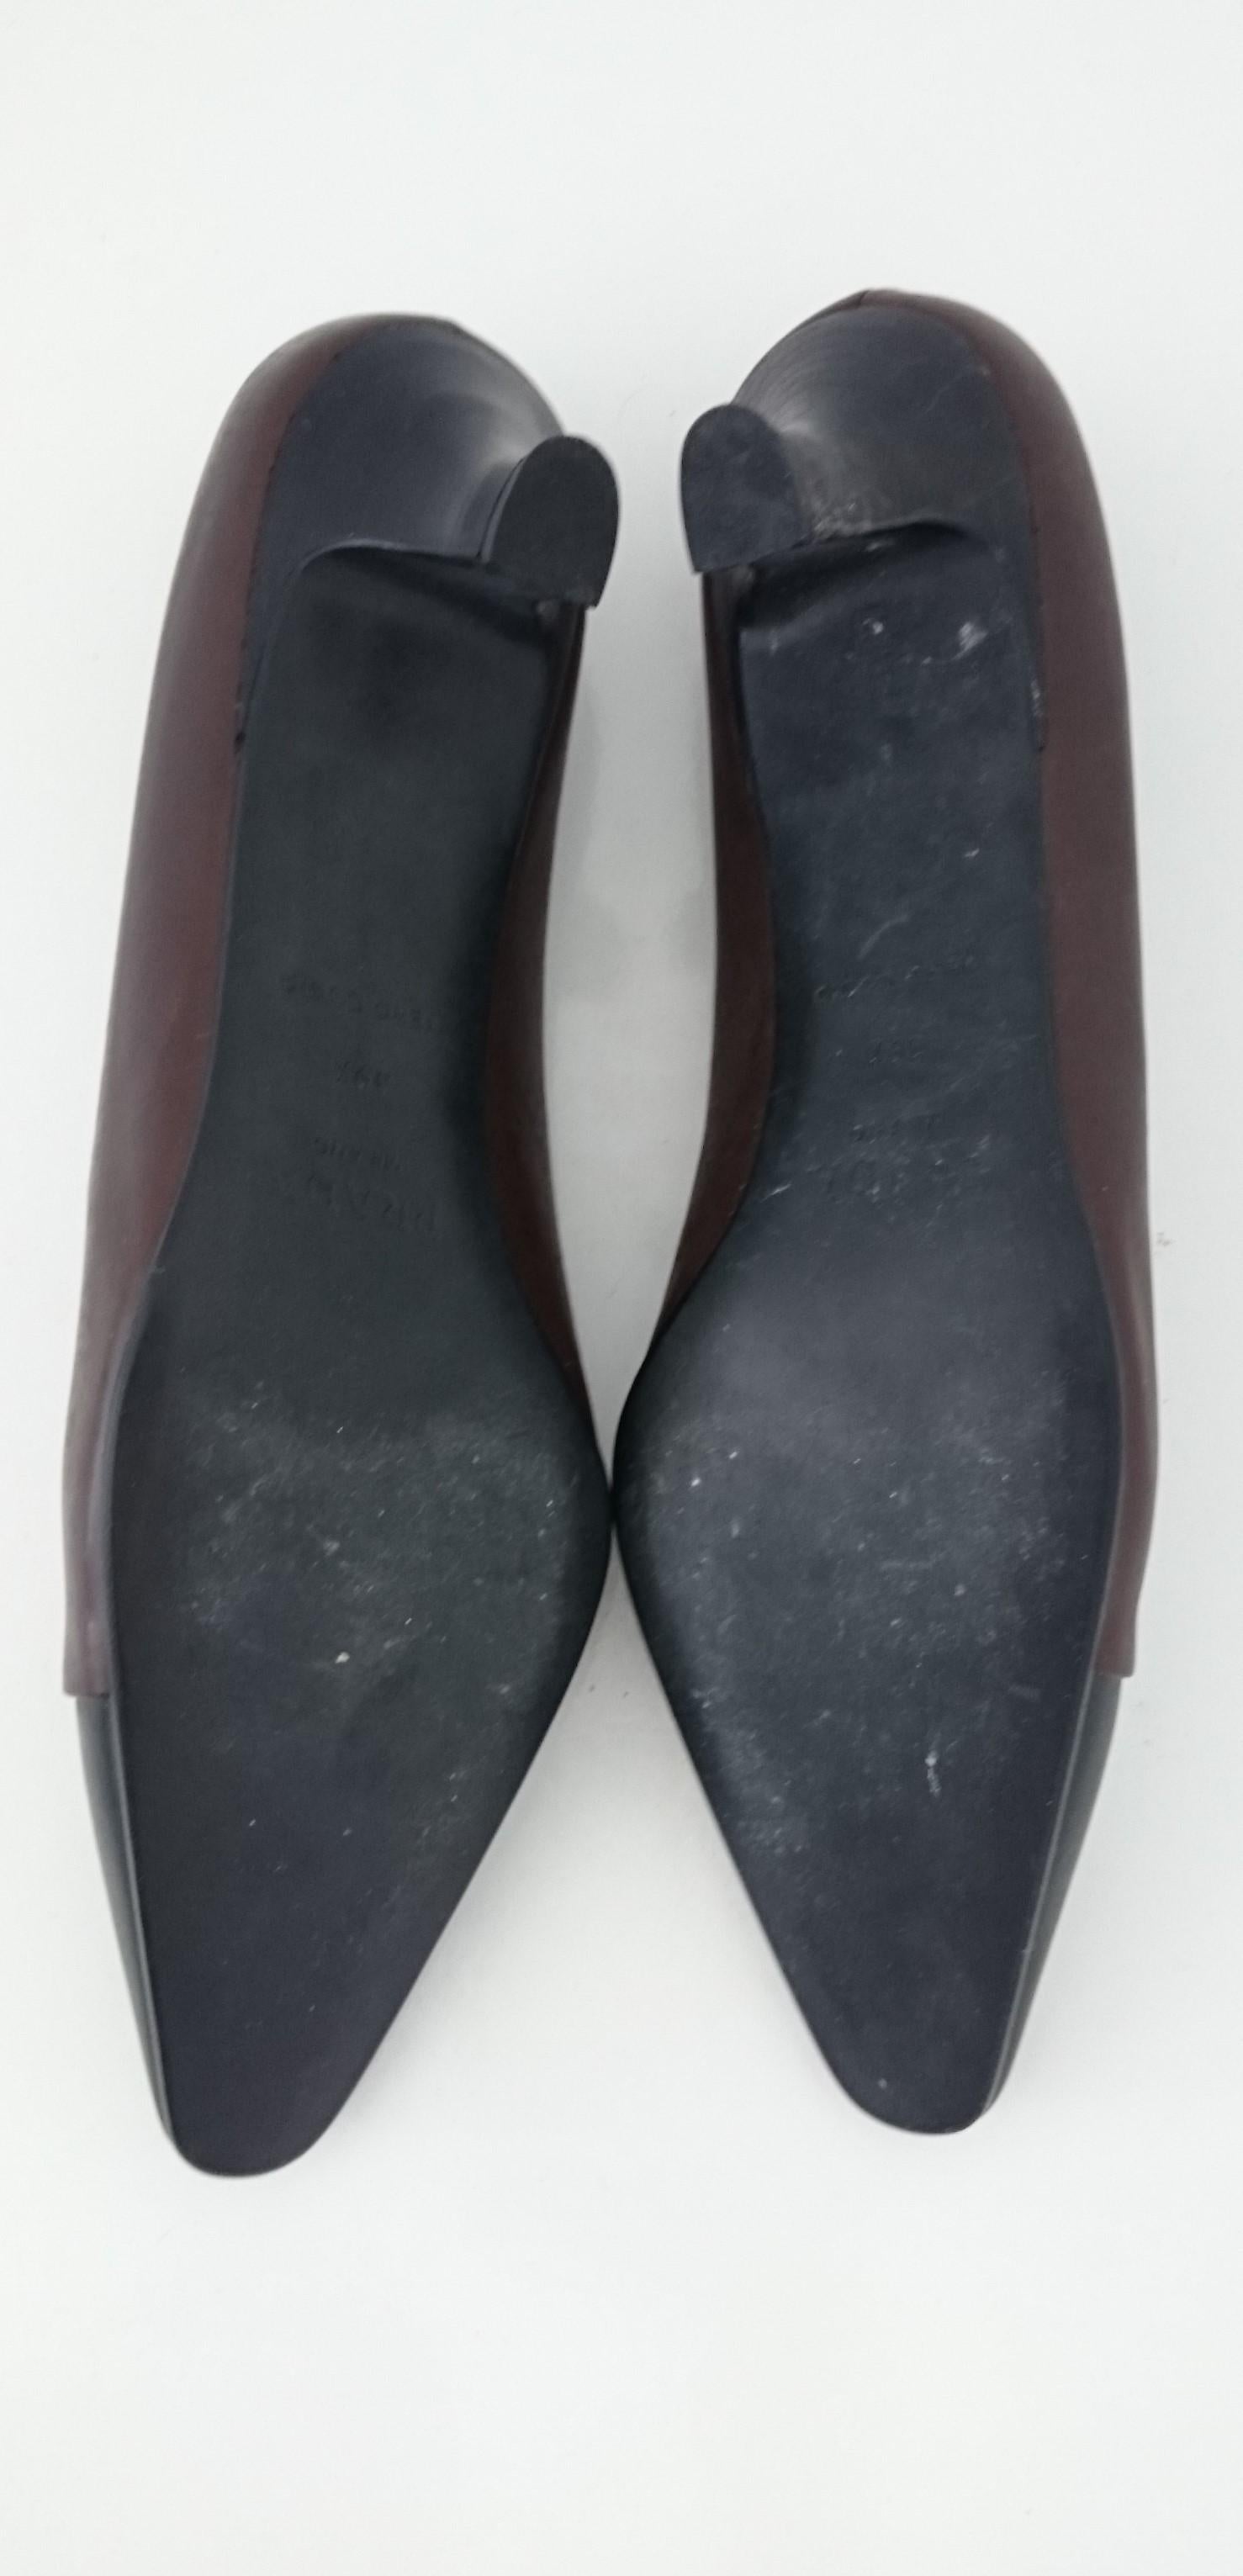 Prada Dark Bicolor Heels in Leather. Size 39 1/2 For Sale 1